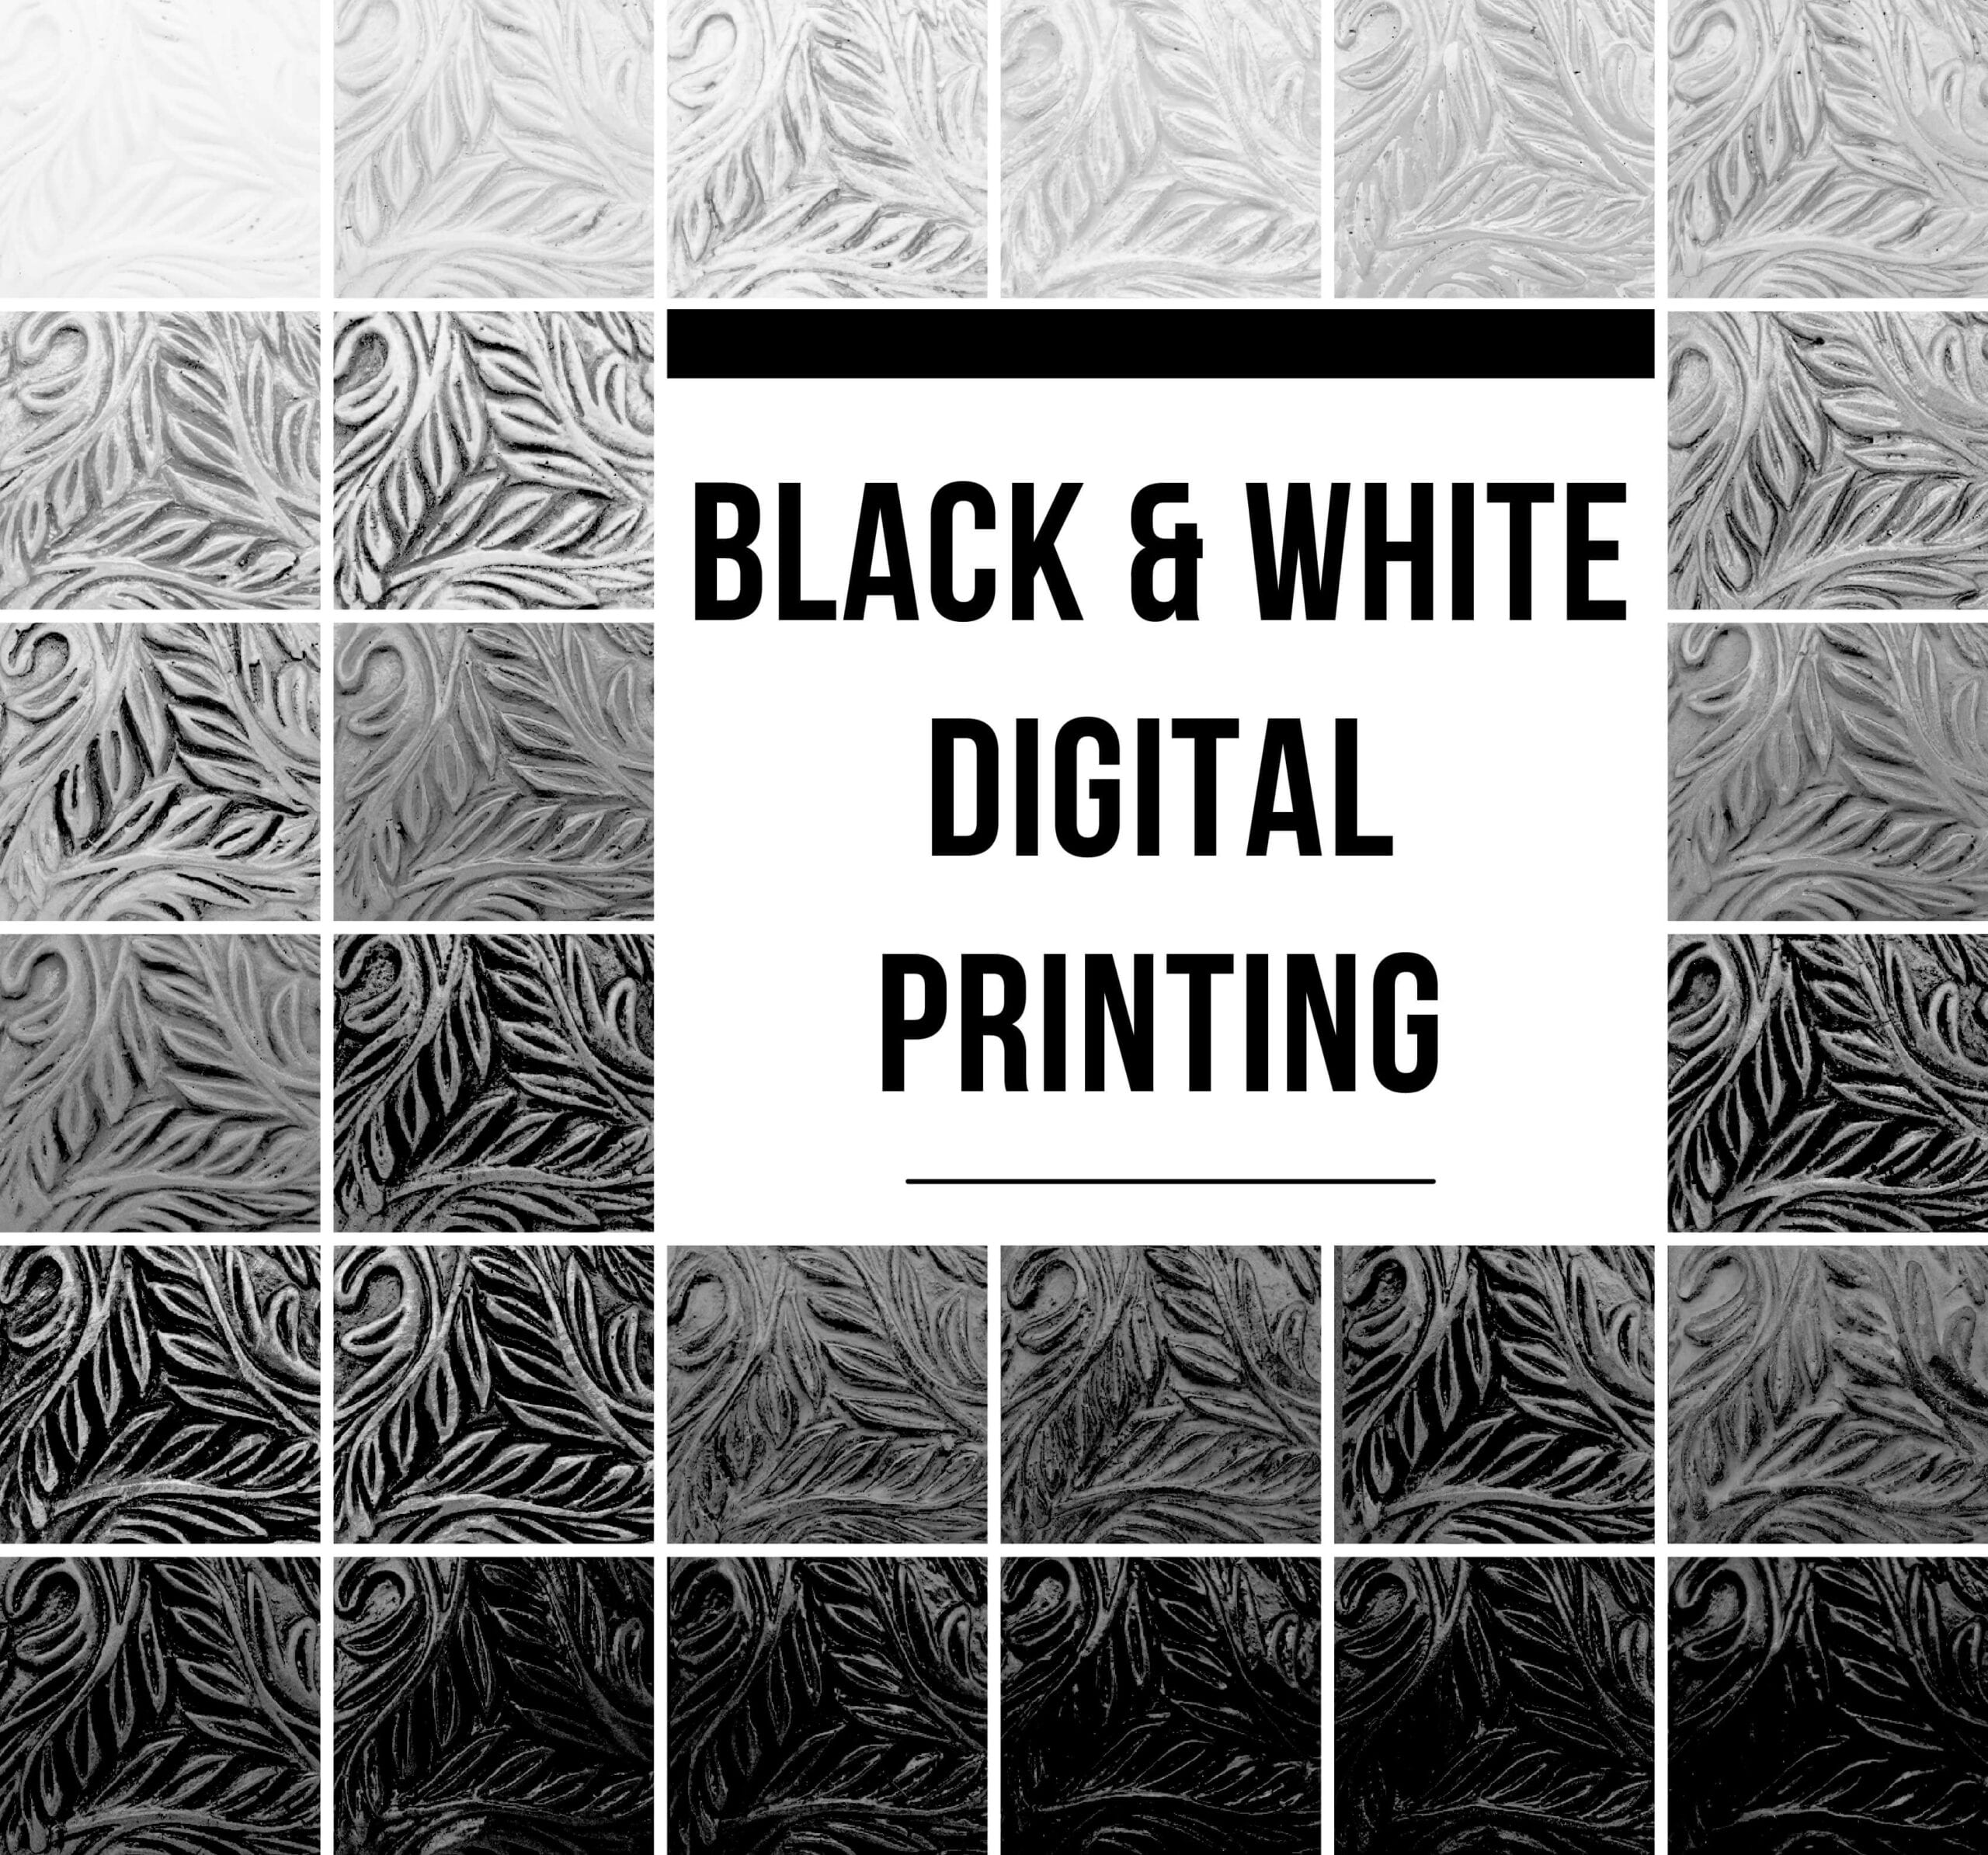 Black & white digital printing